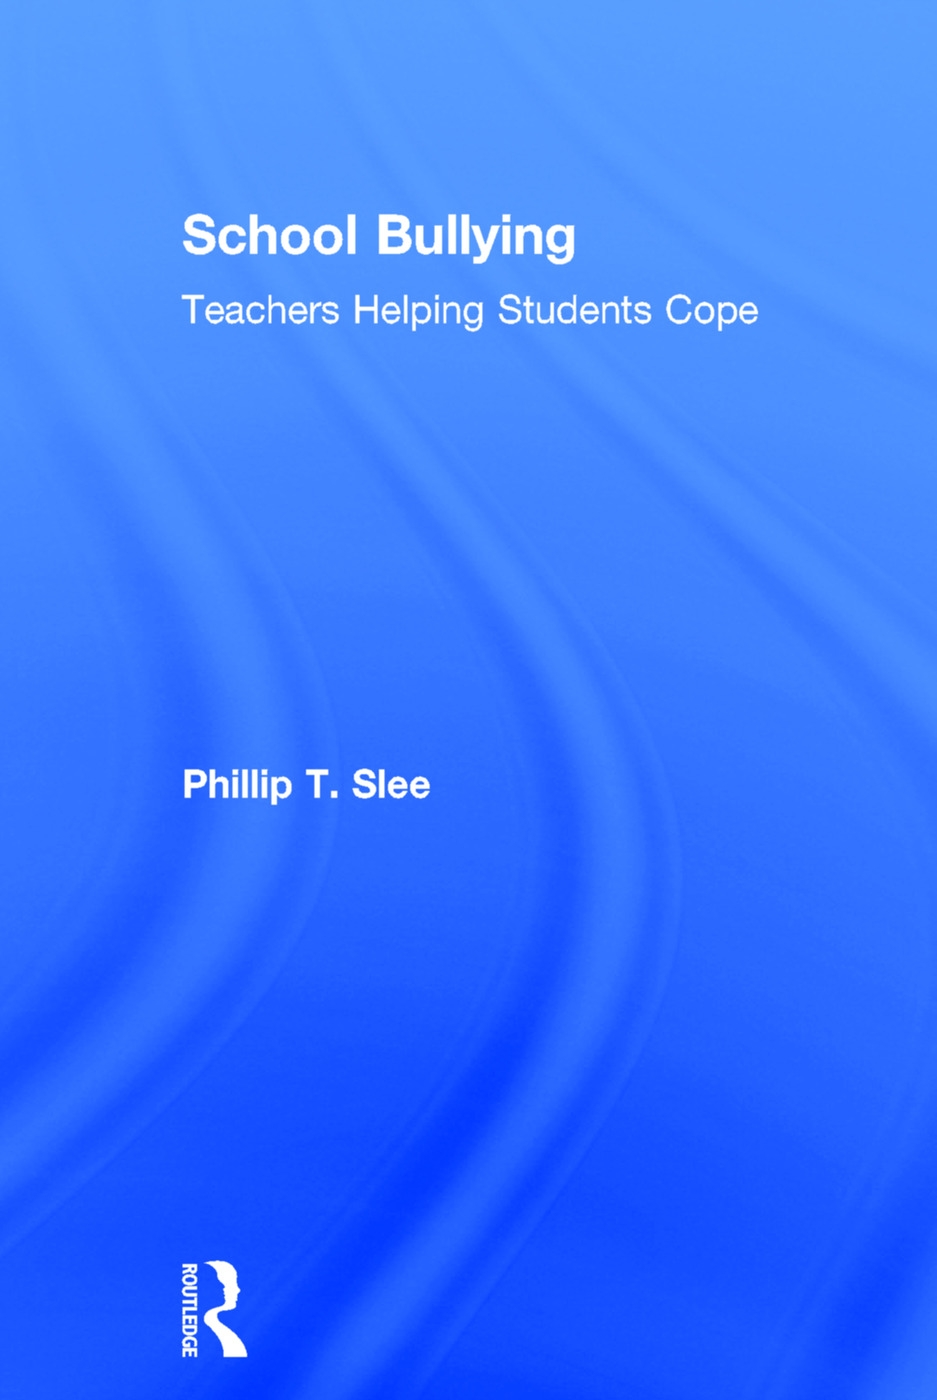 School Bullying: Teachers Helping Students Cope